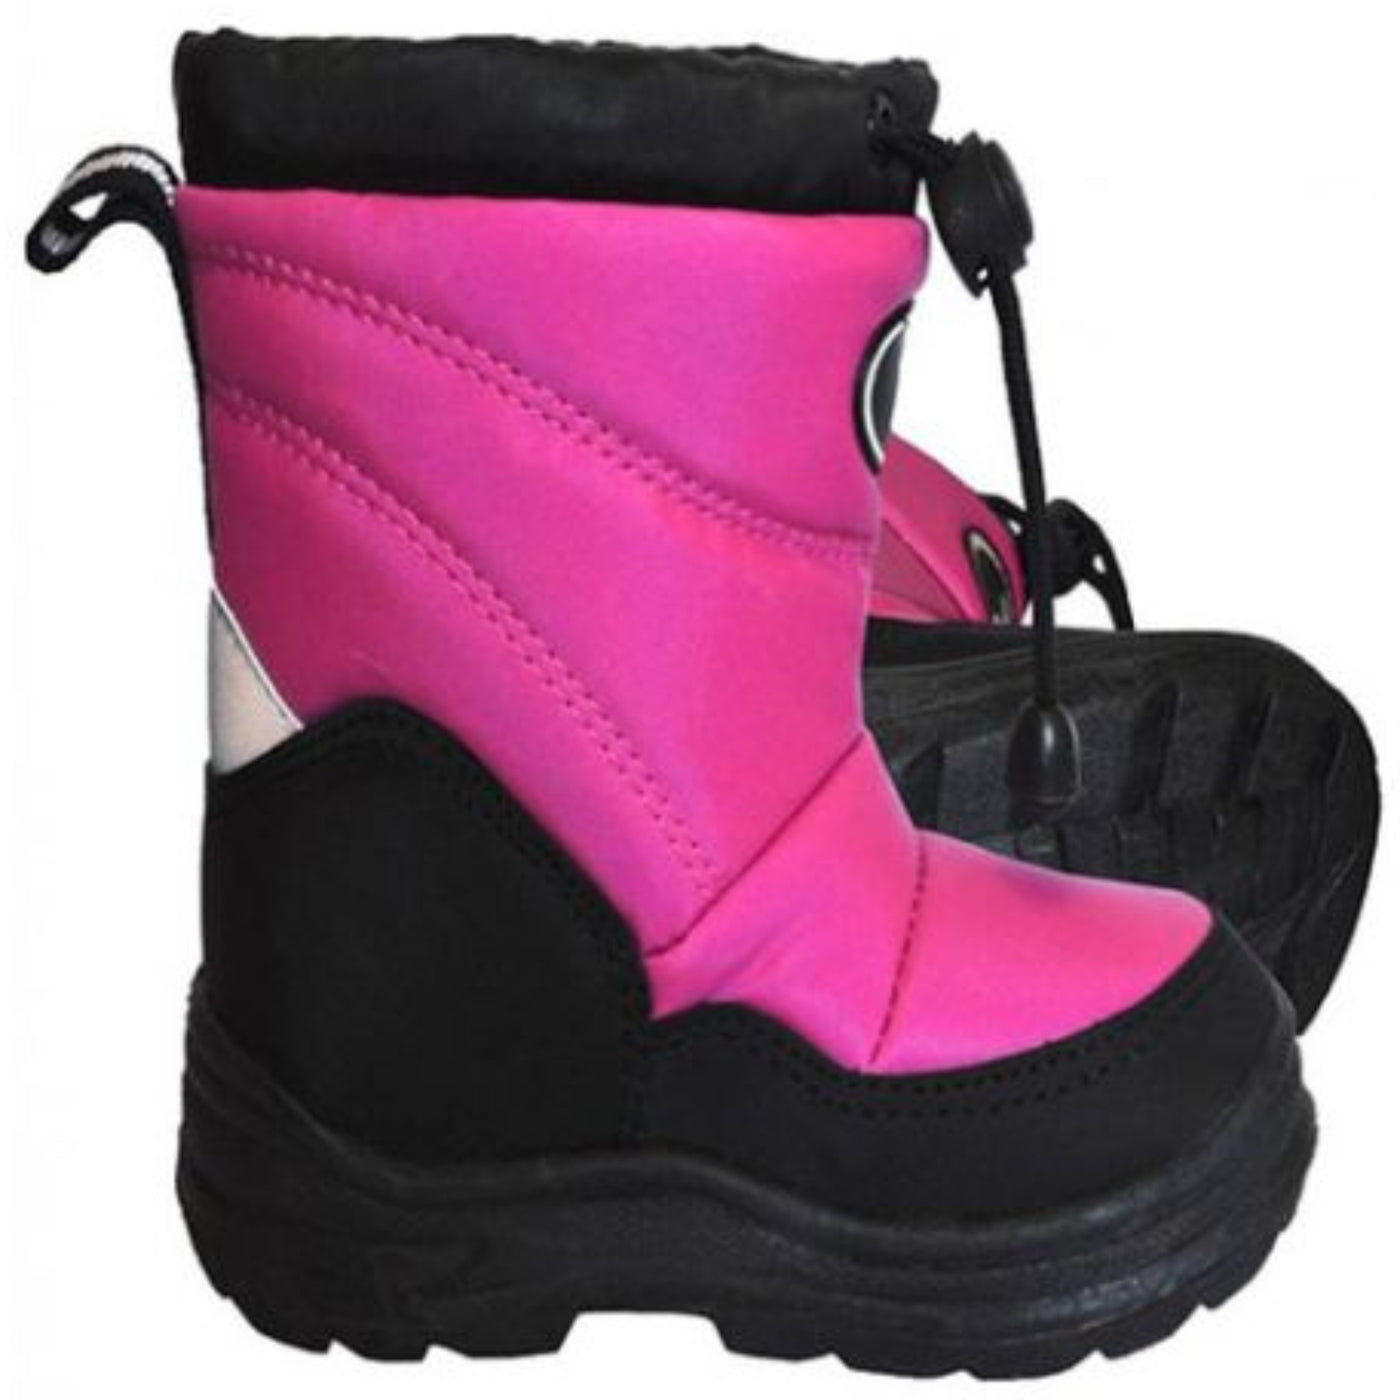 XTM Kids Puddles Kids Snow Boots - Pink